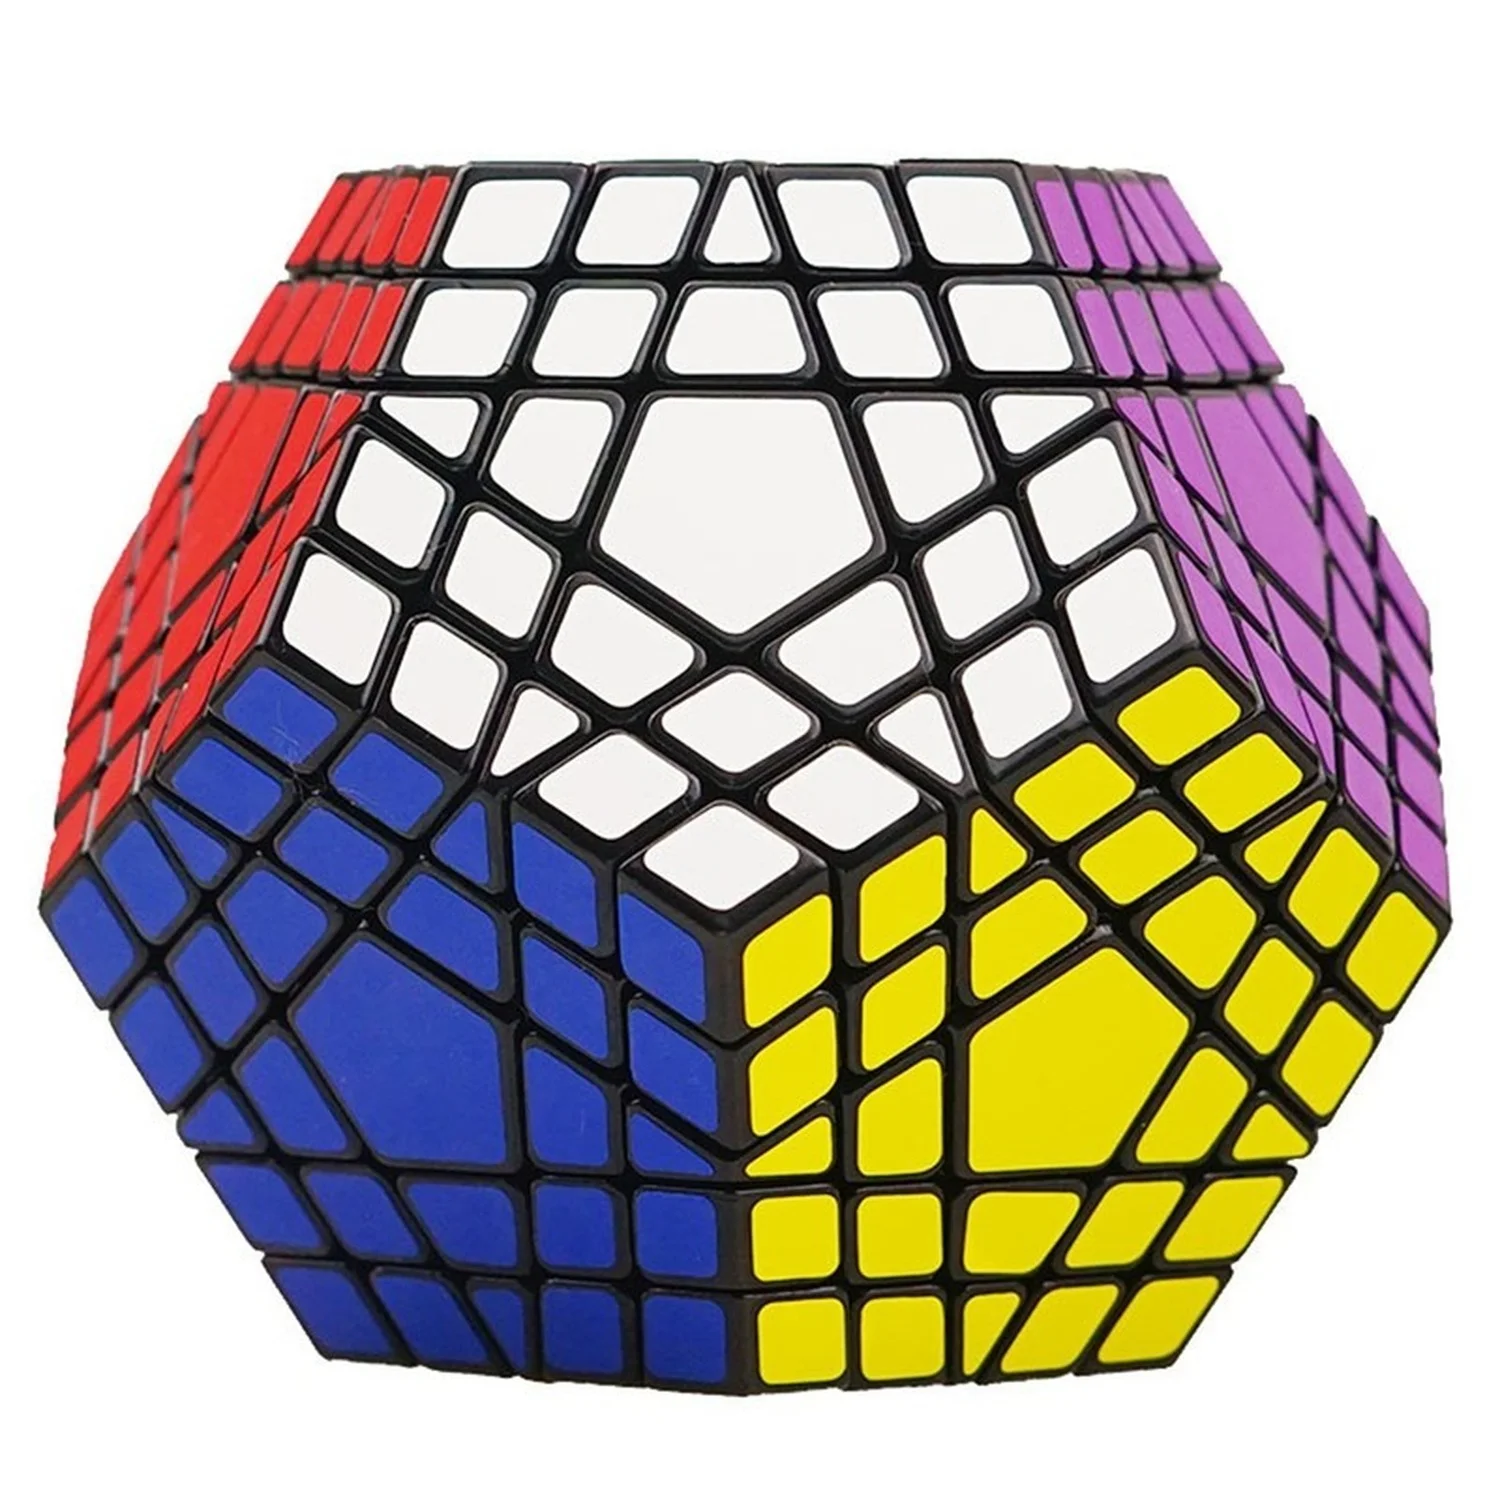 Shengshou Wumofang-cubo mÃ¡gico Sengso 5x5, cubo profesional del dodecaedro, rompecabezas, juguetes educativos,...